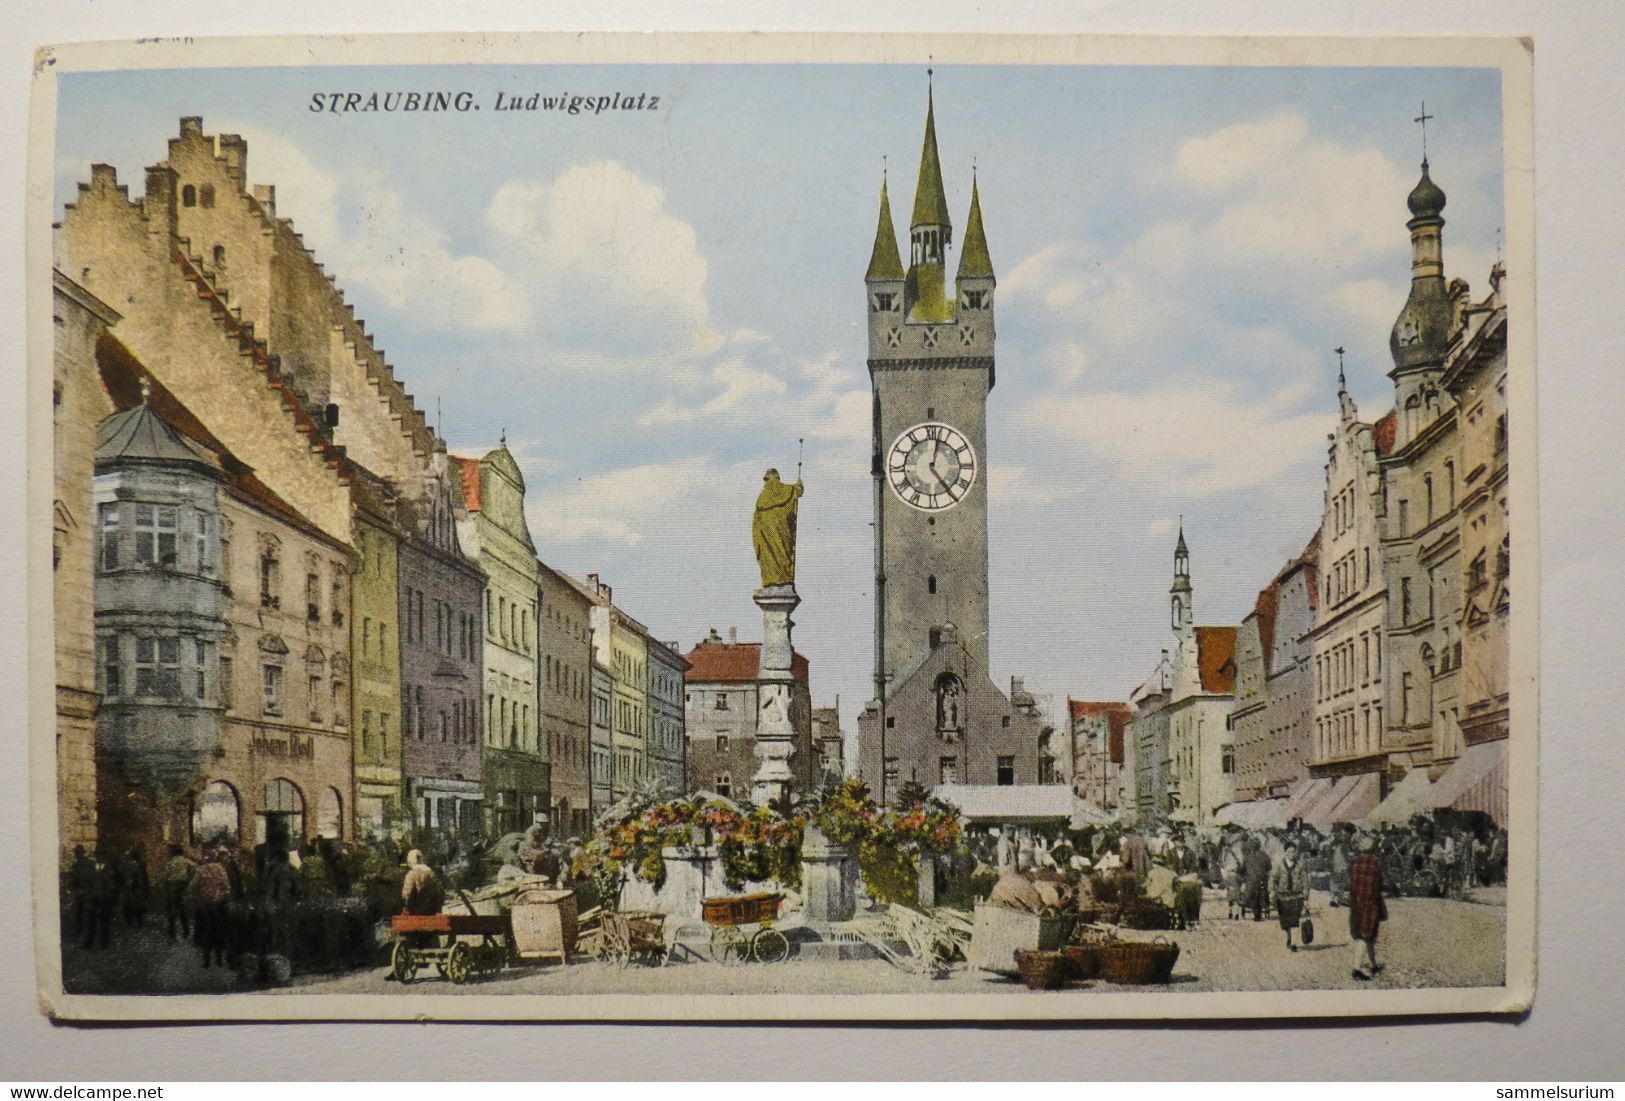 (11/11/76) Postkarte/AK "Straubing" Ludwigsplatz - Straubing